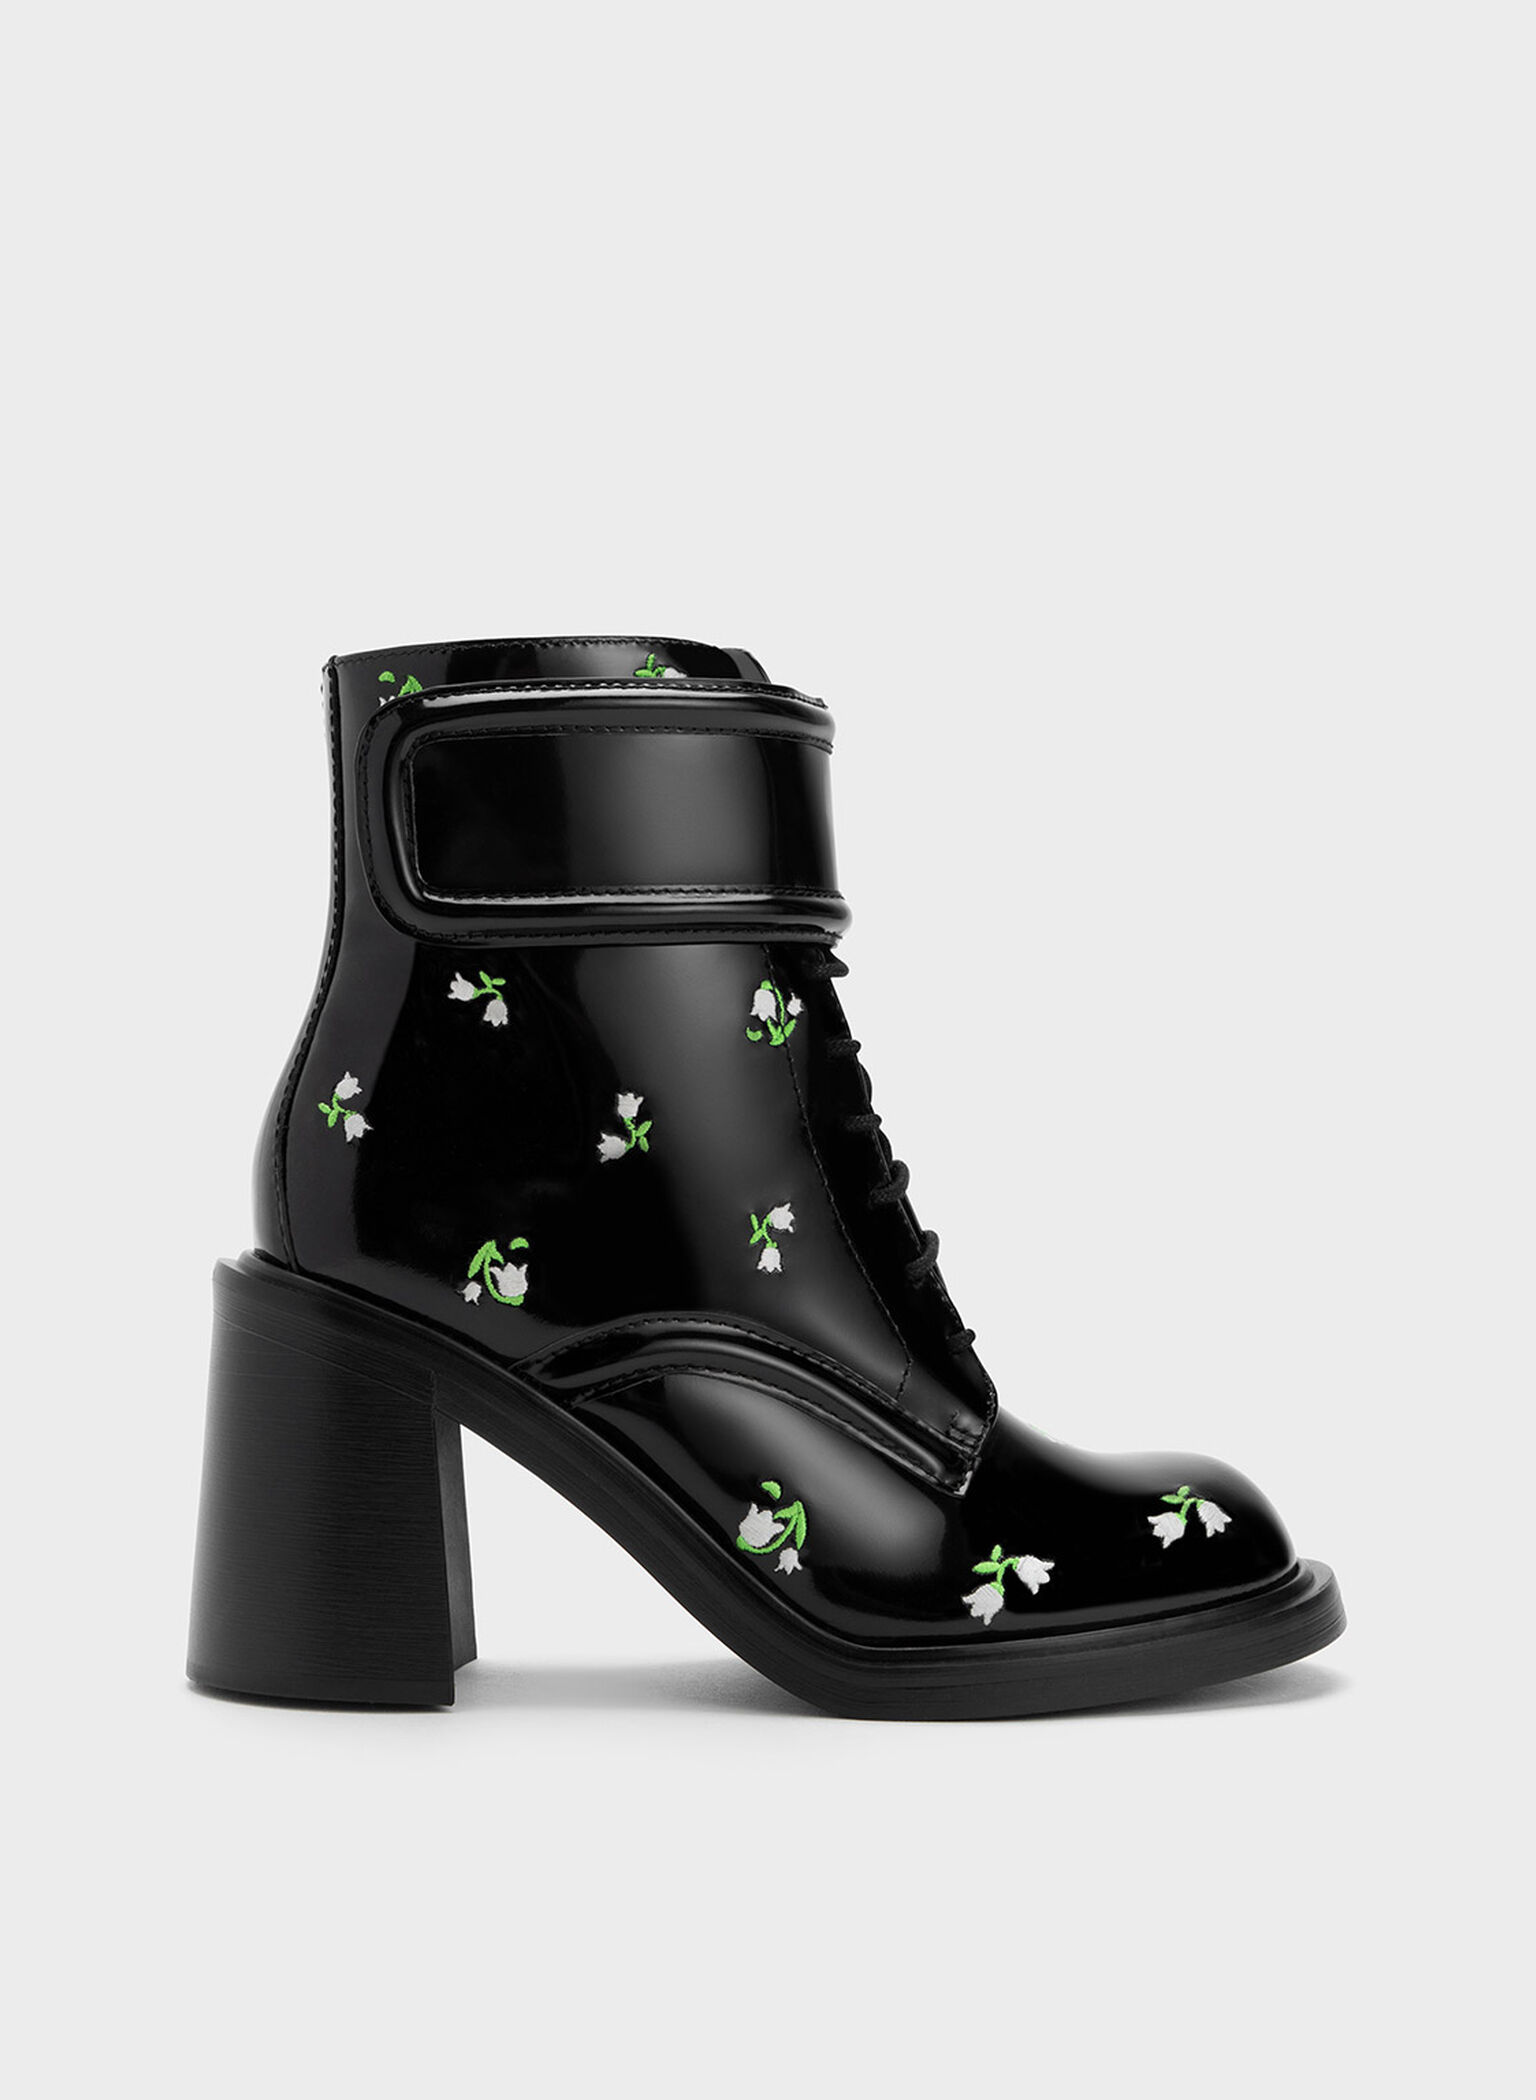 Rosalie Leather Floral Ankle Boots, Multi, hi-res